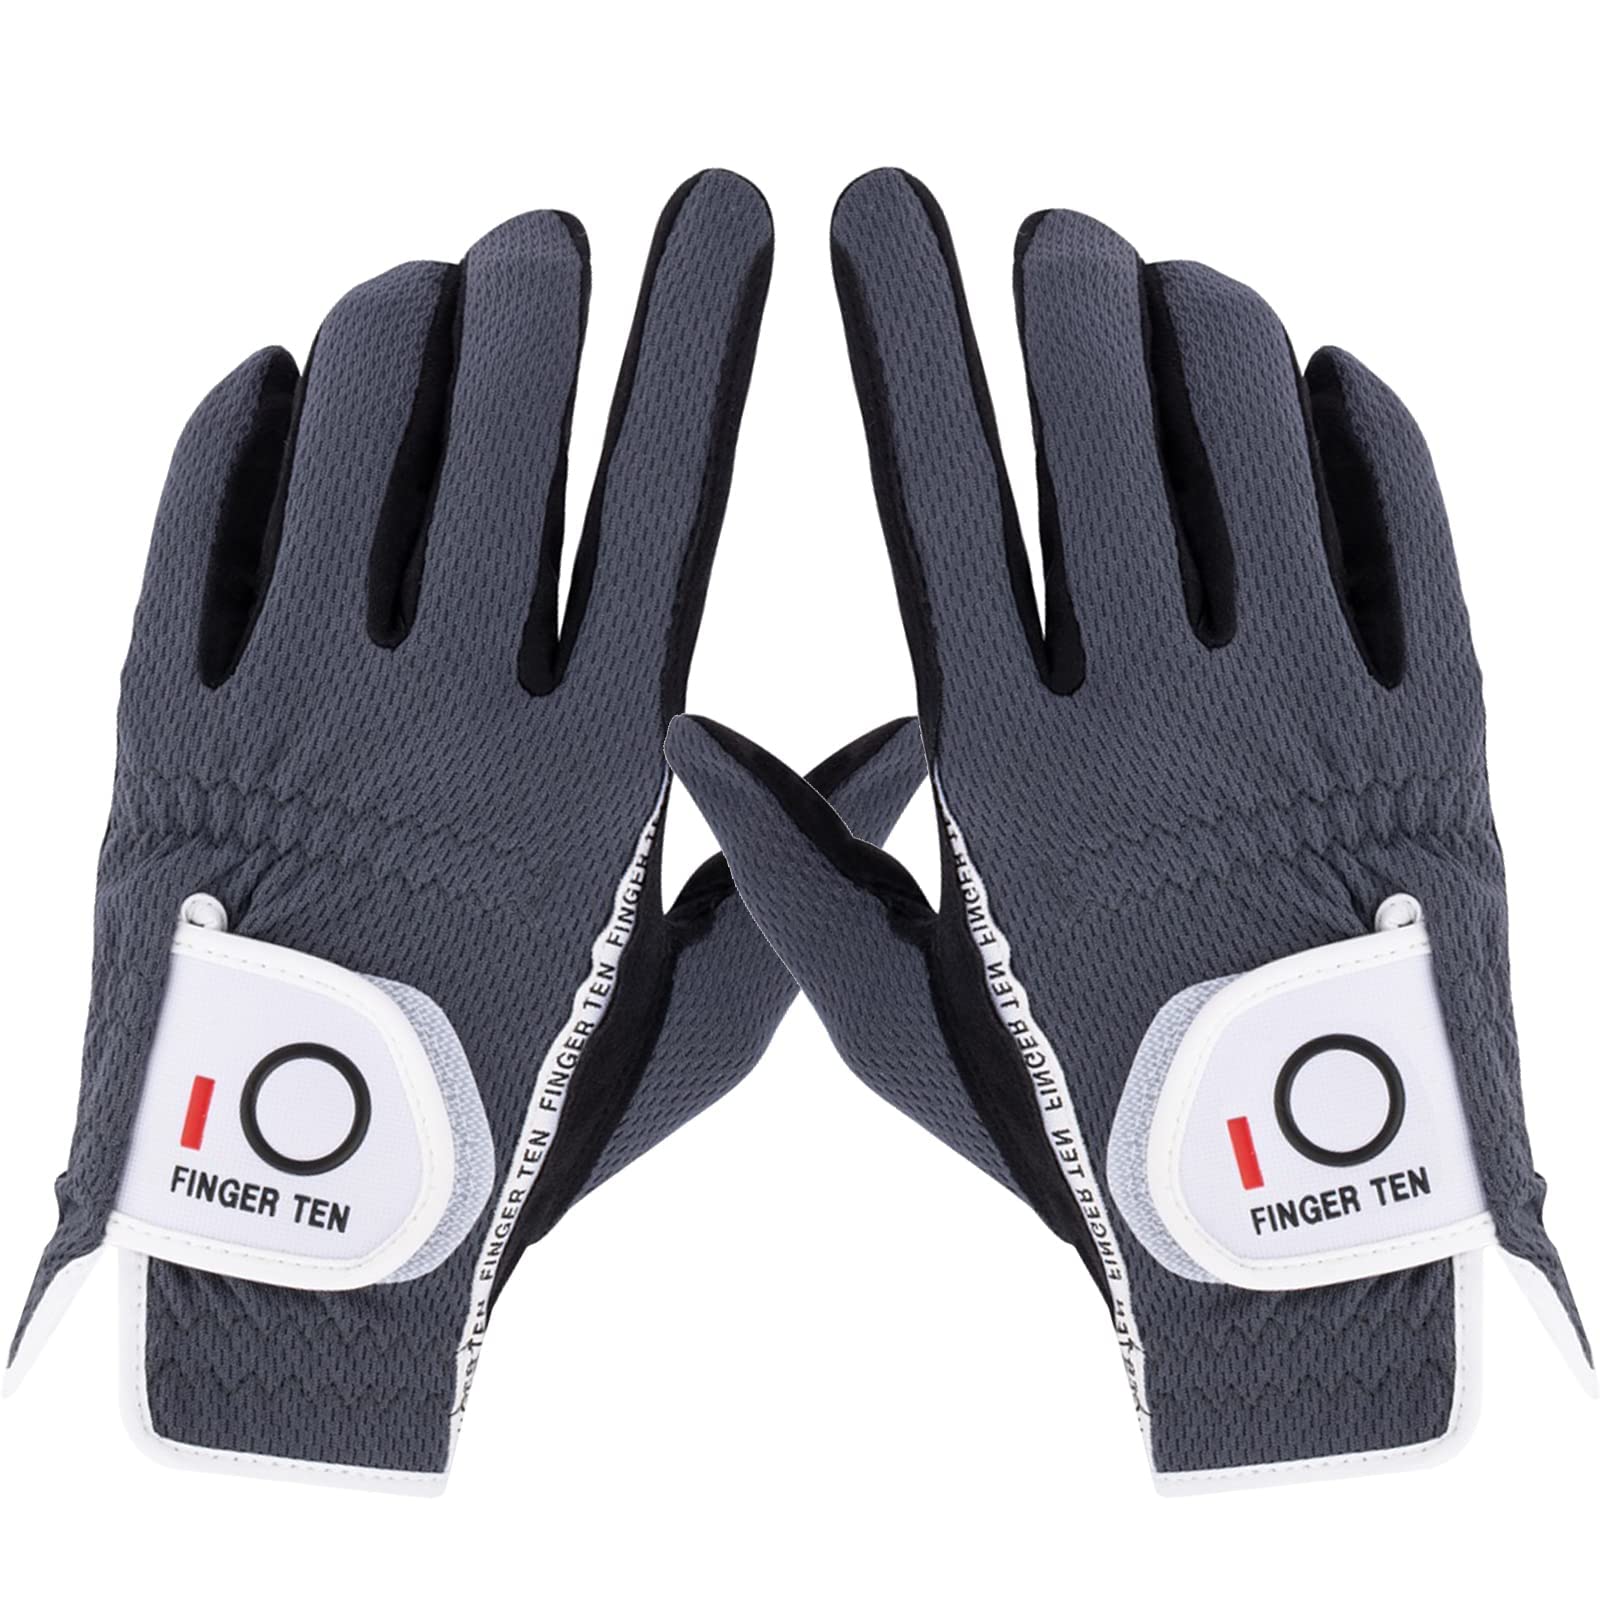 Amy Sport Golf Gloves